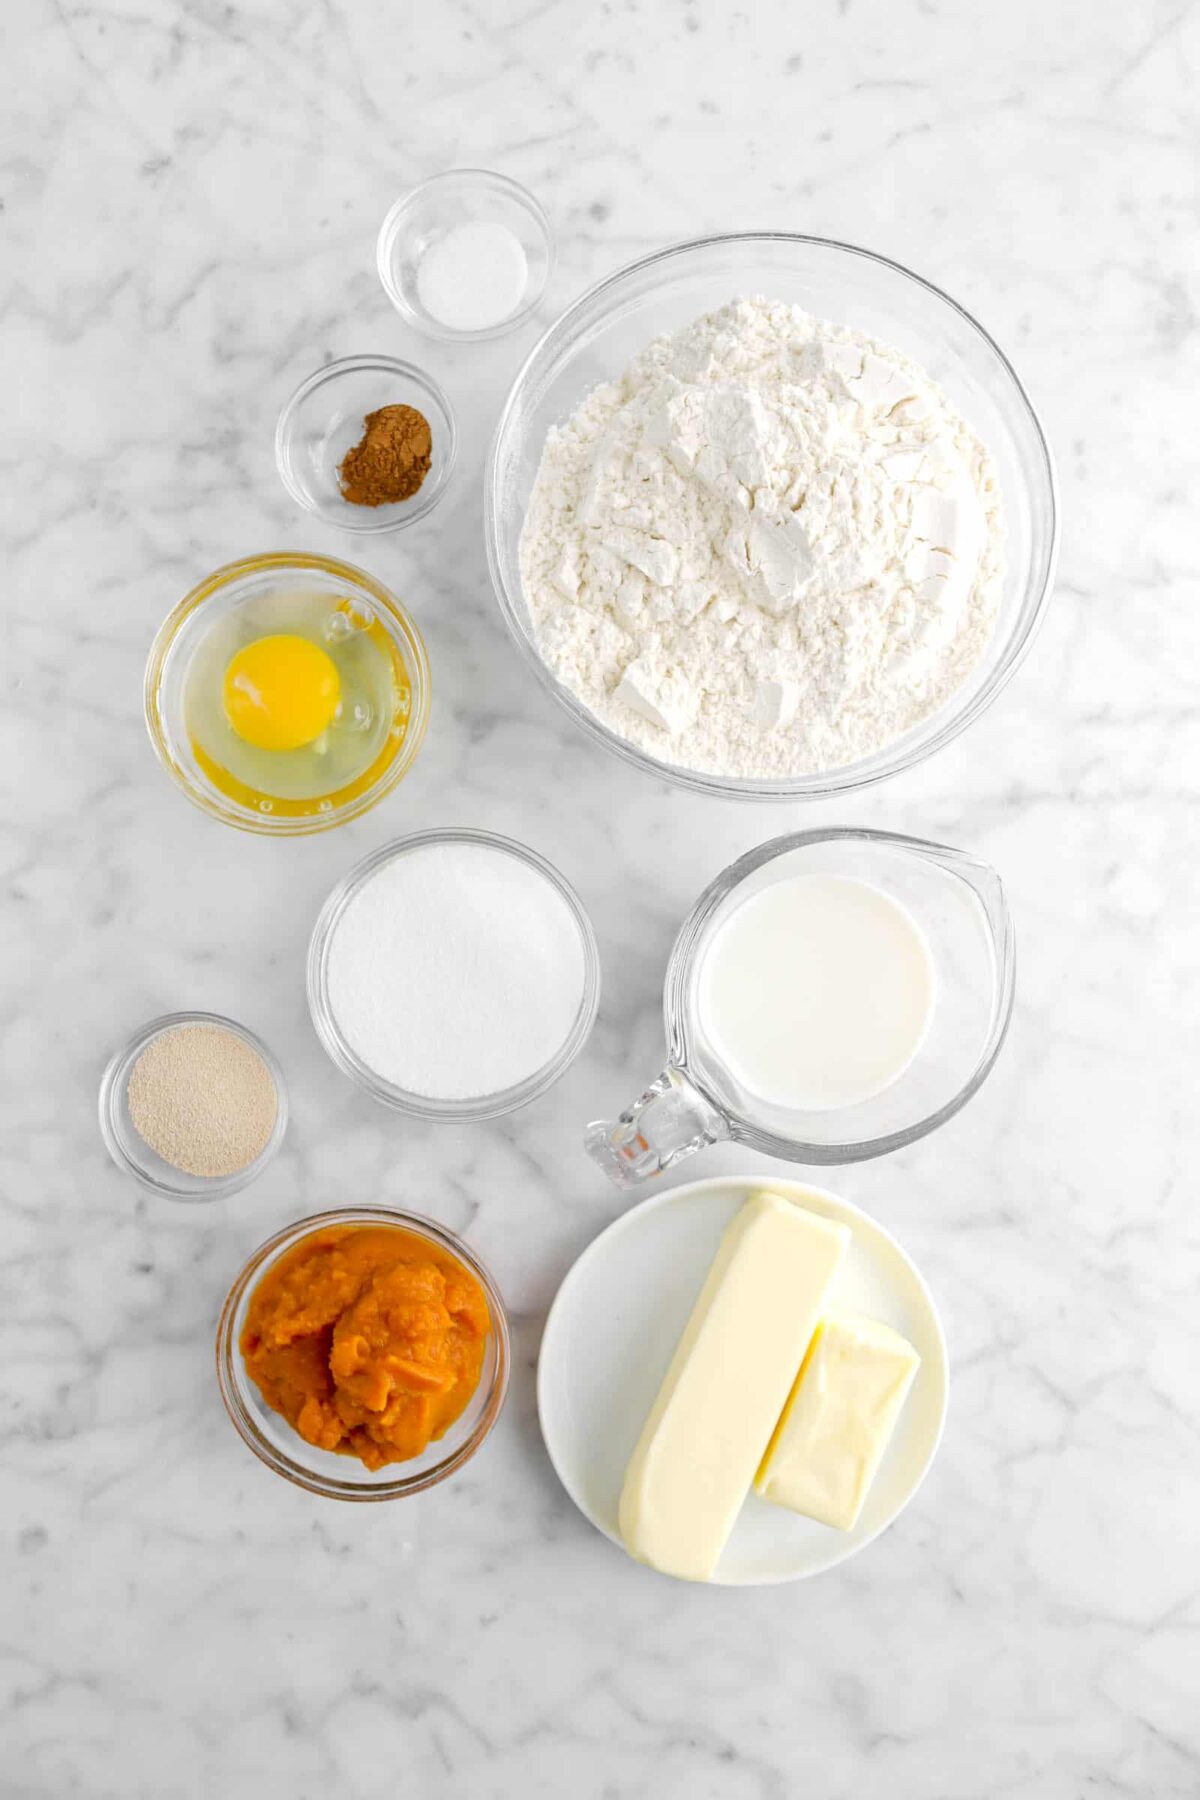 salt, pumpkin pie spice, flour, egg, sugar, milk, butter, pumpkin, and yeast on marble counter